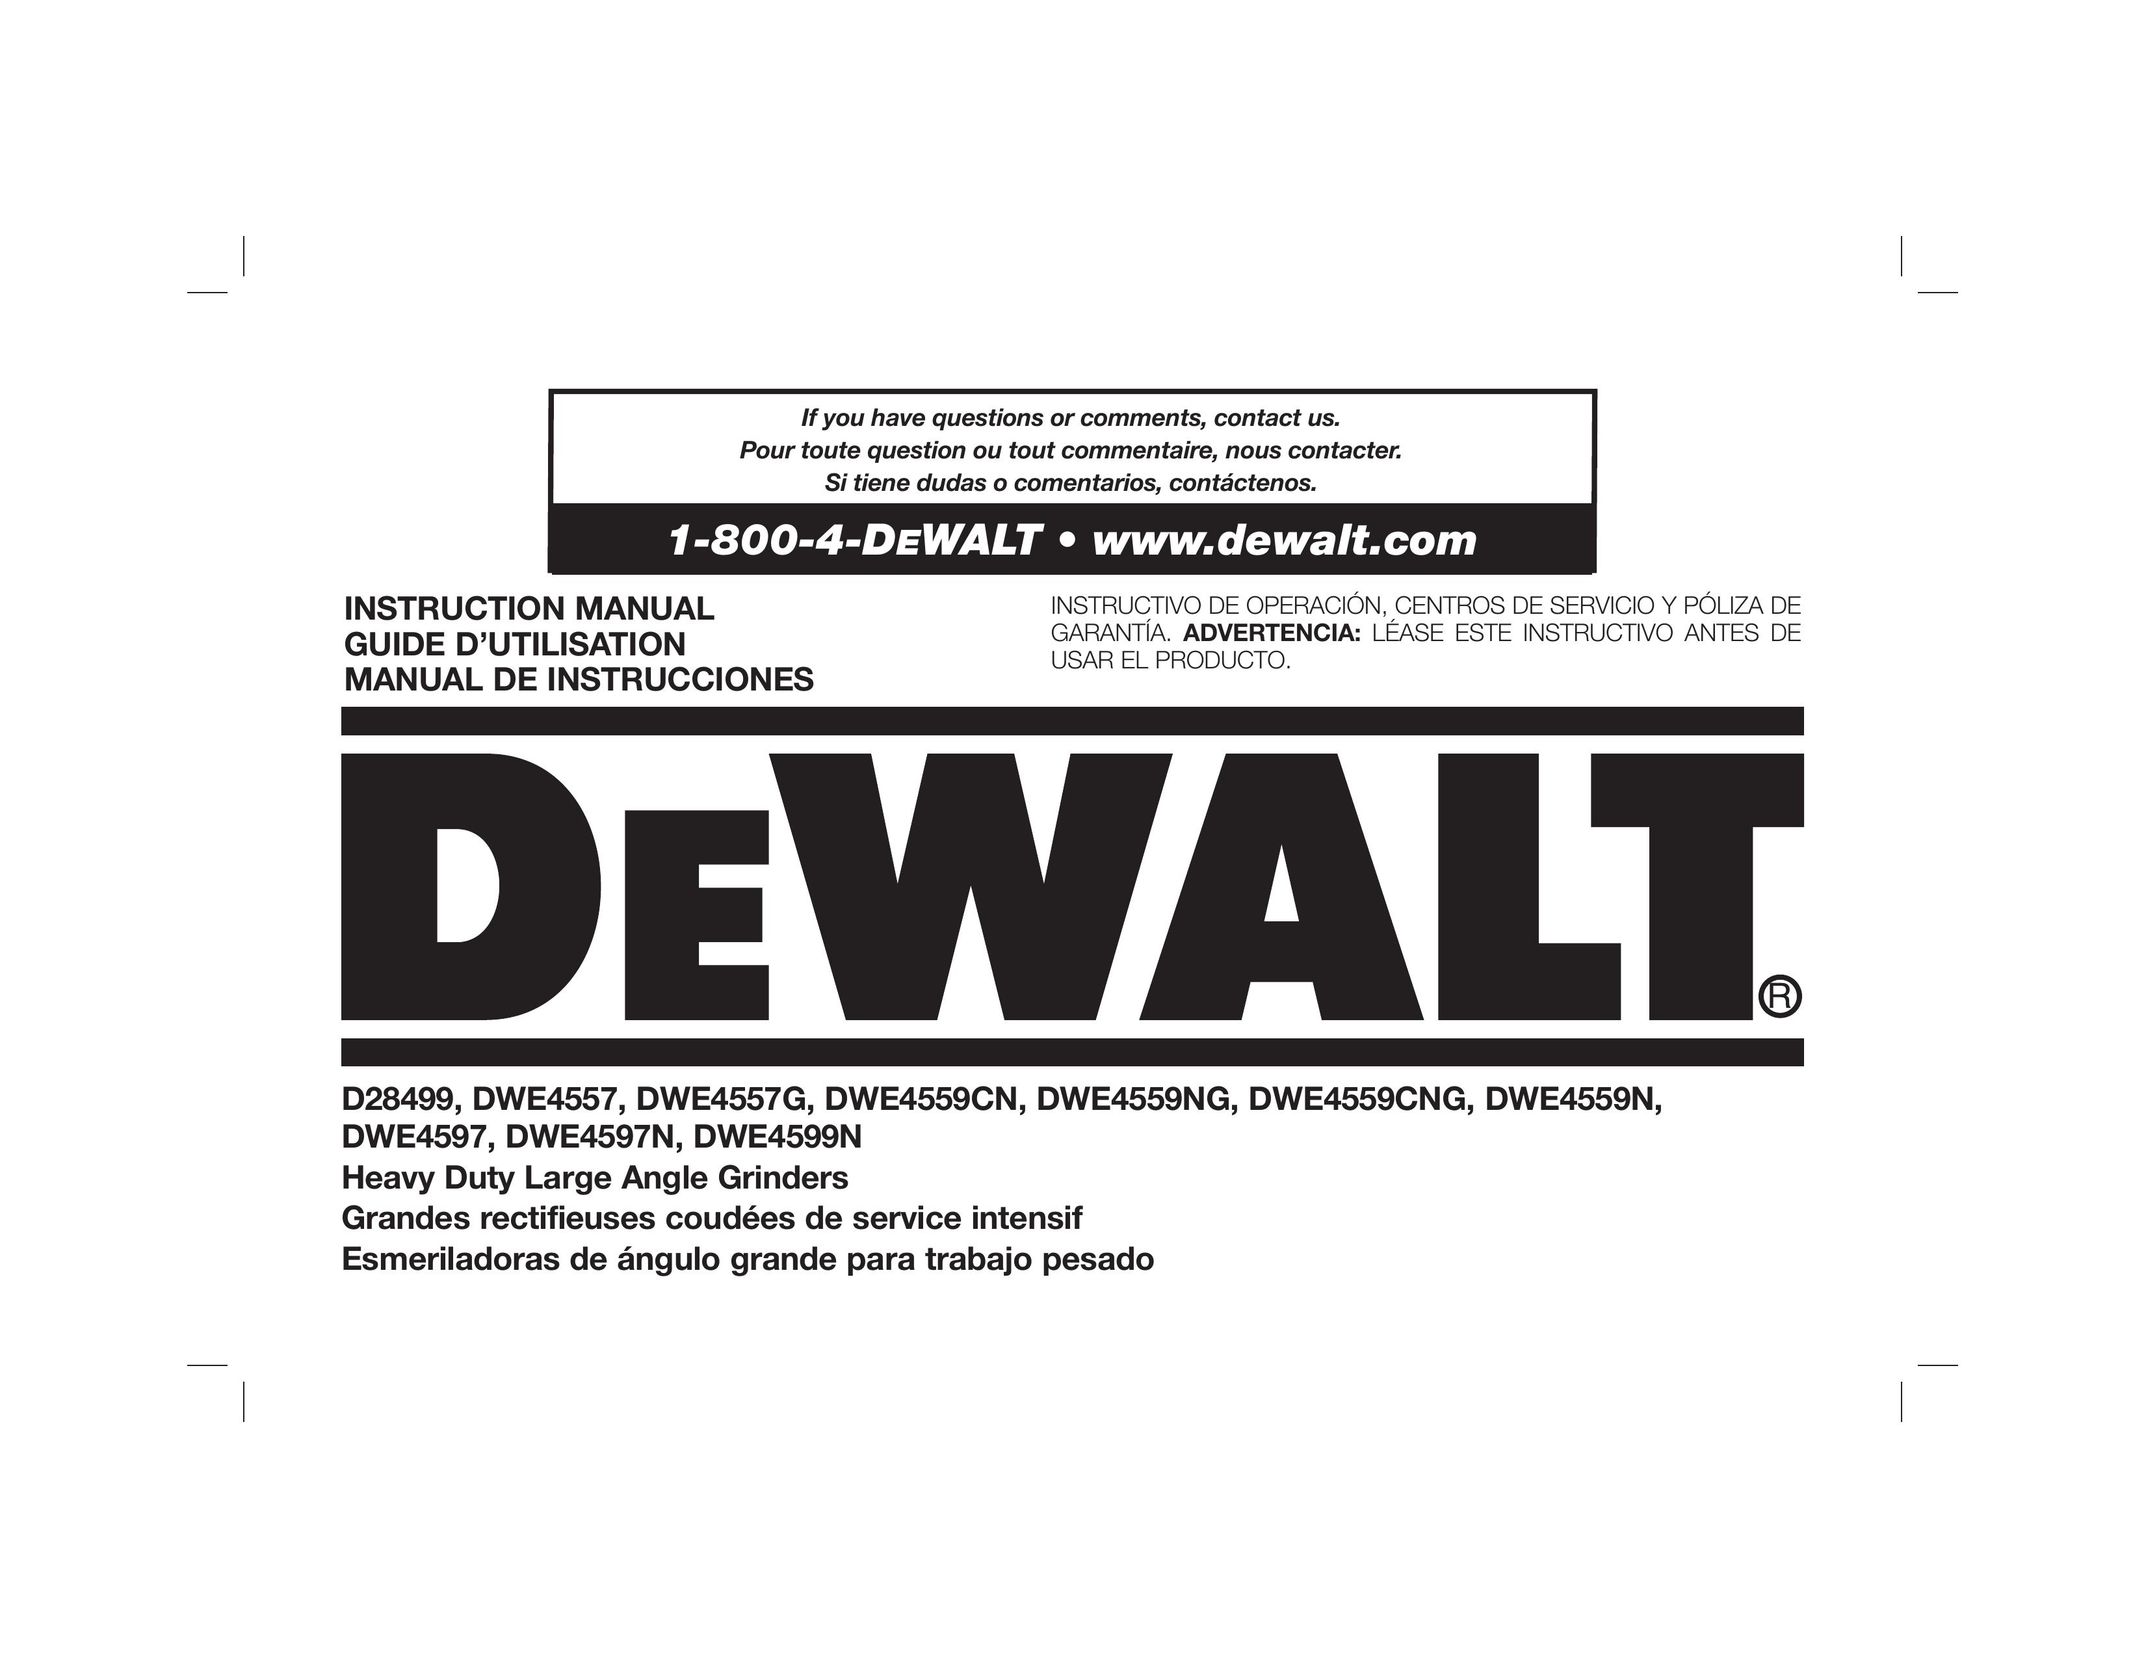 DeWalt DWE4559NG Grinder User Manual